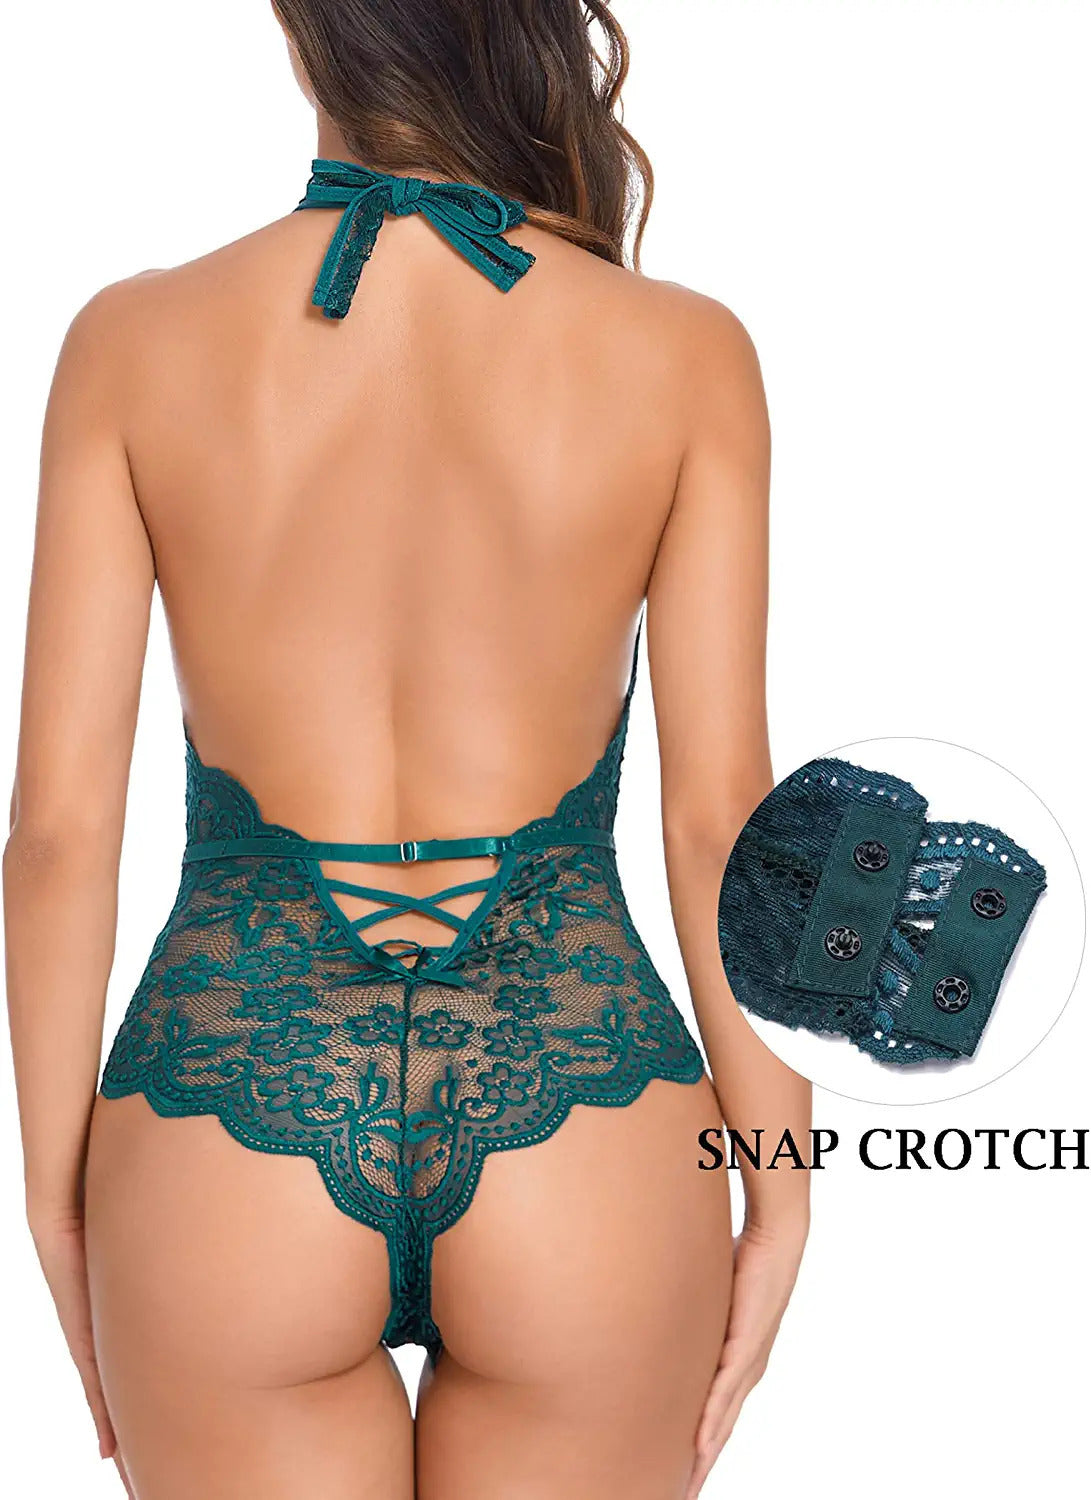 Pratiharye Women Snap Crotch Lingerie Sexy Lace Bodysuit - cortch button